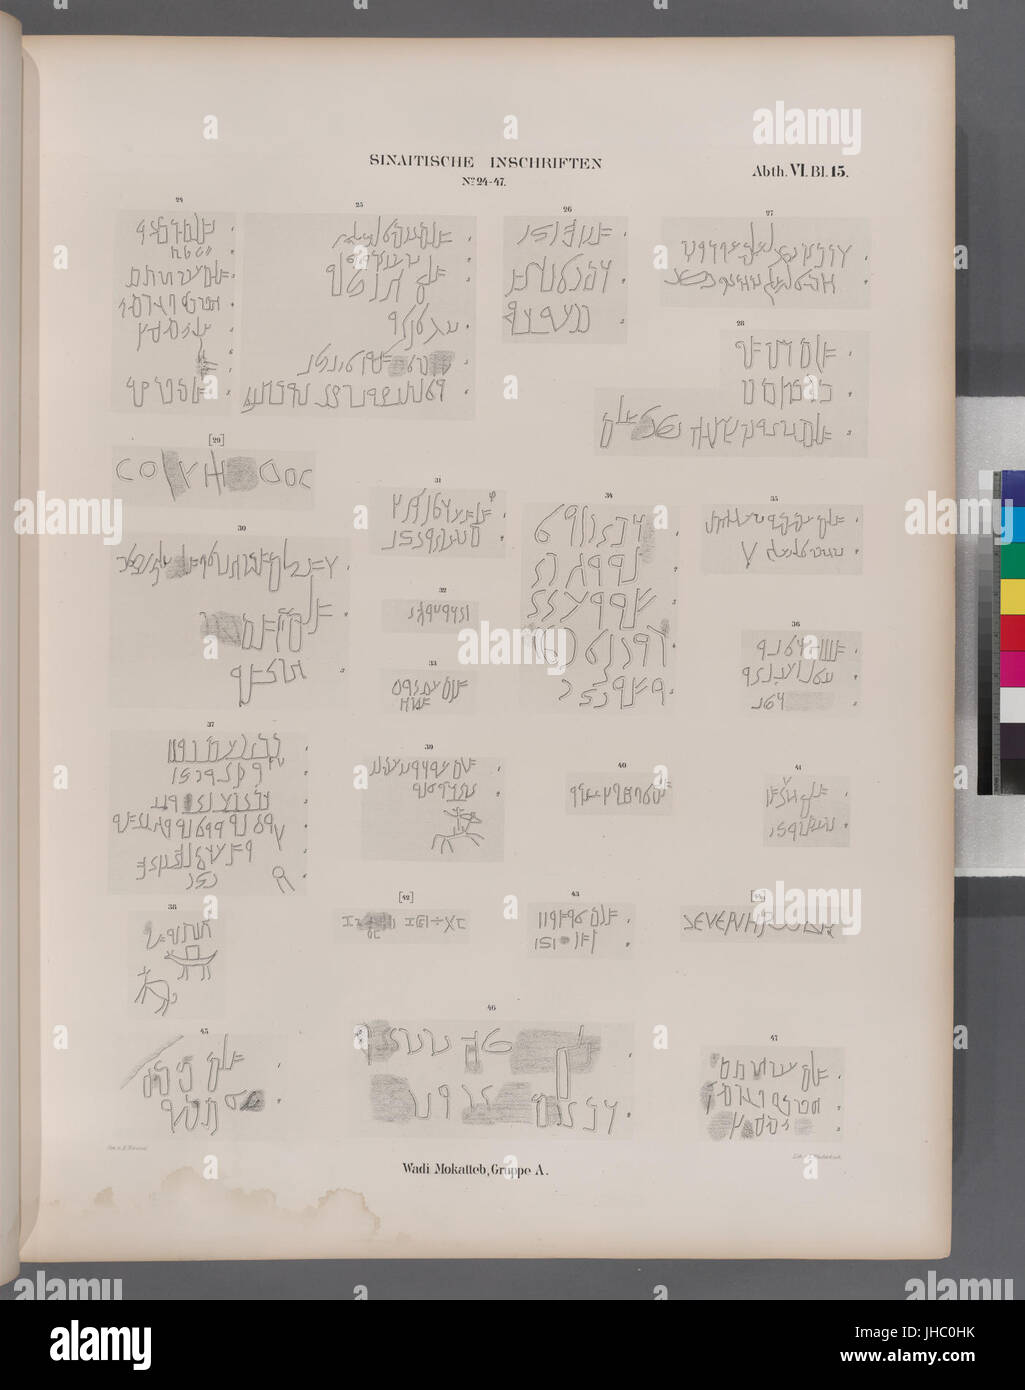 Sinaitische Inschriften No. 24-47. Wadi Mokatteb, Gruppe A (NYPL b14291191-44241) Stock Photo